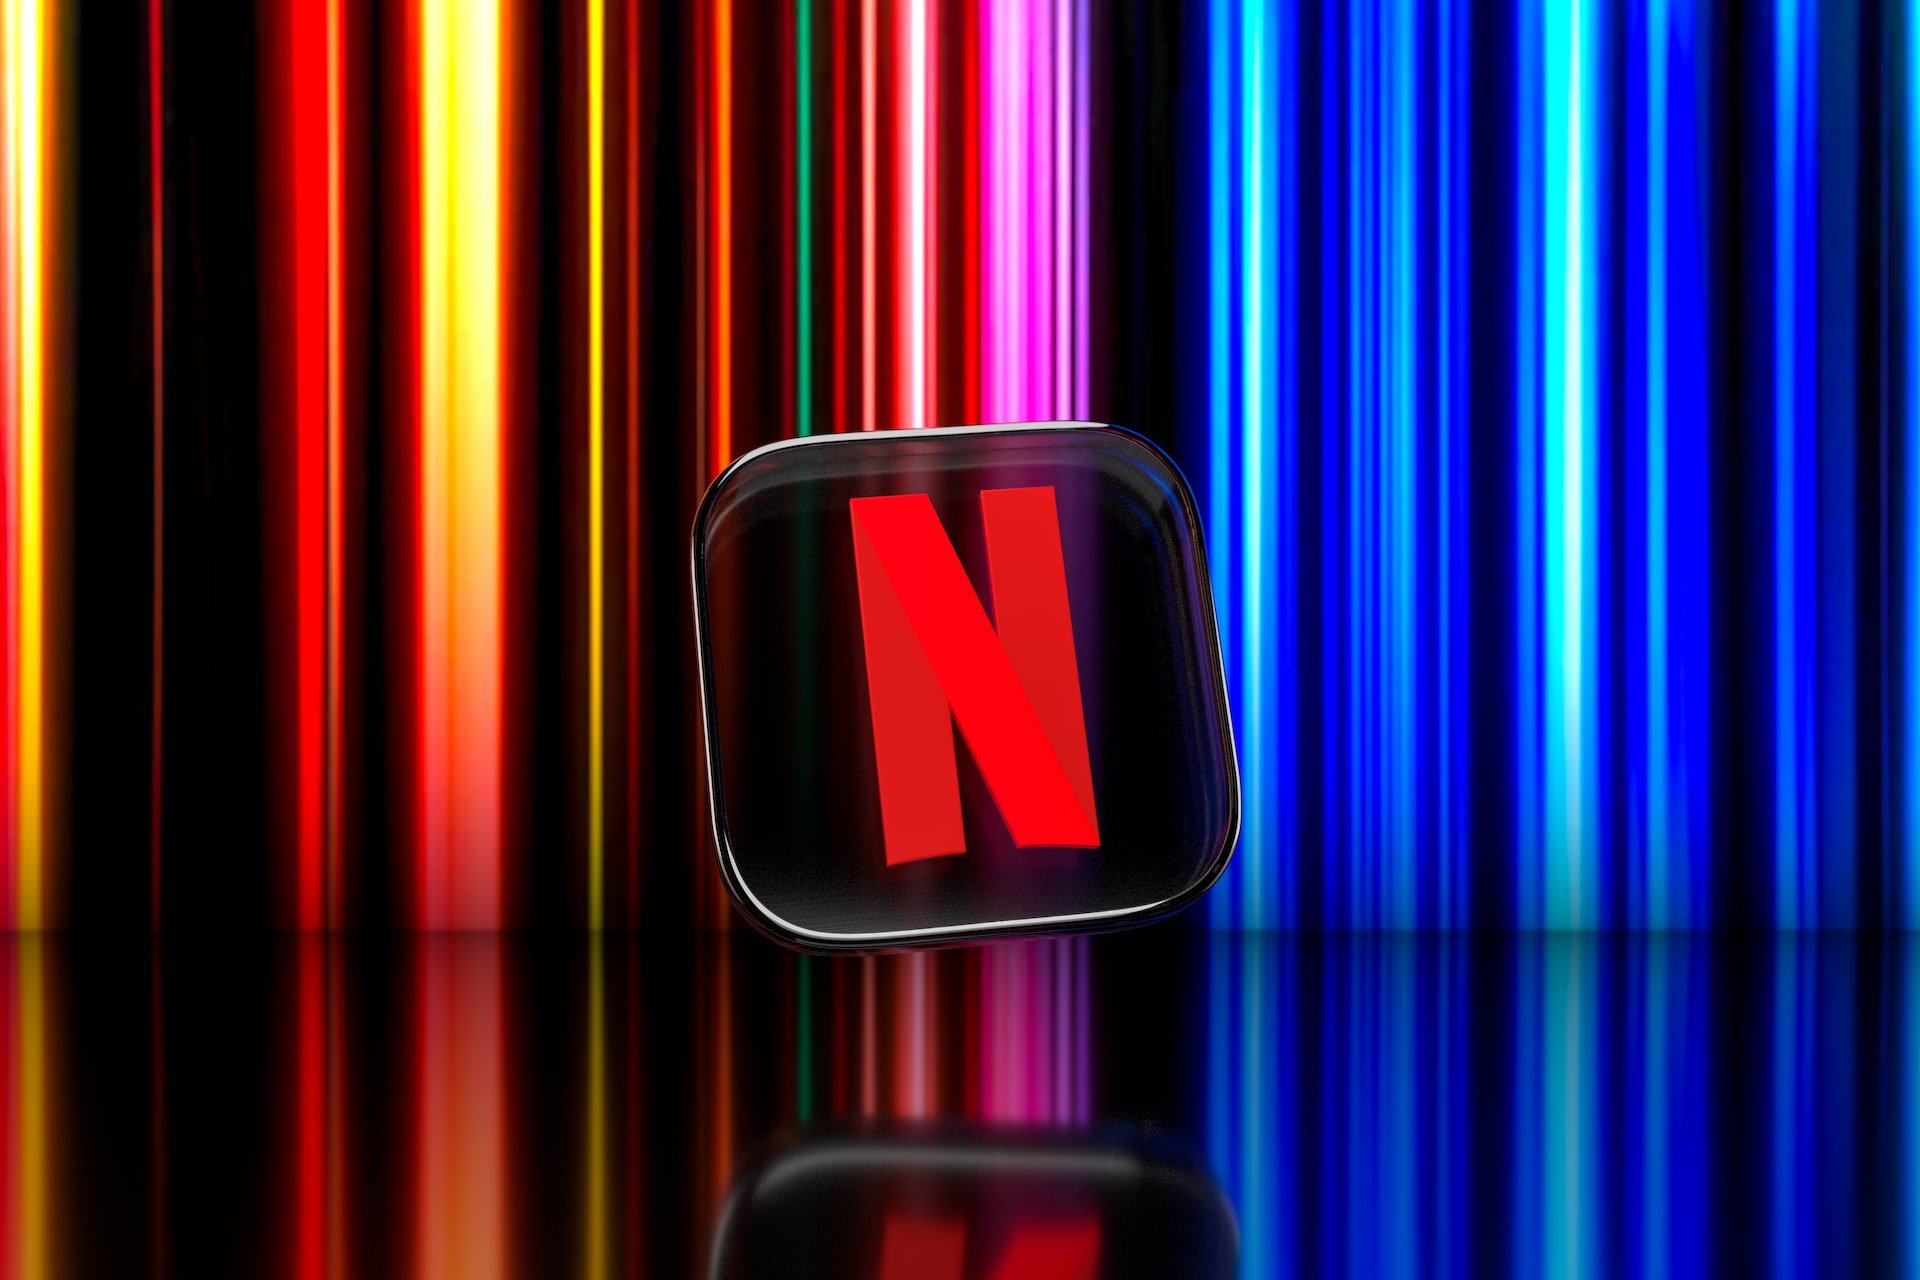 Plano da Netflix de taxar contas compartilhadas só está confundindo  assinantes – Tecnoblog